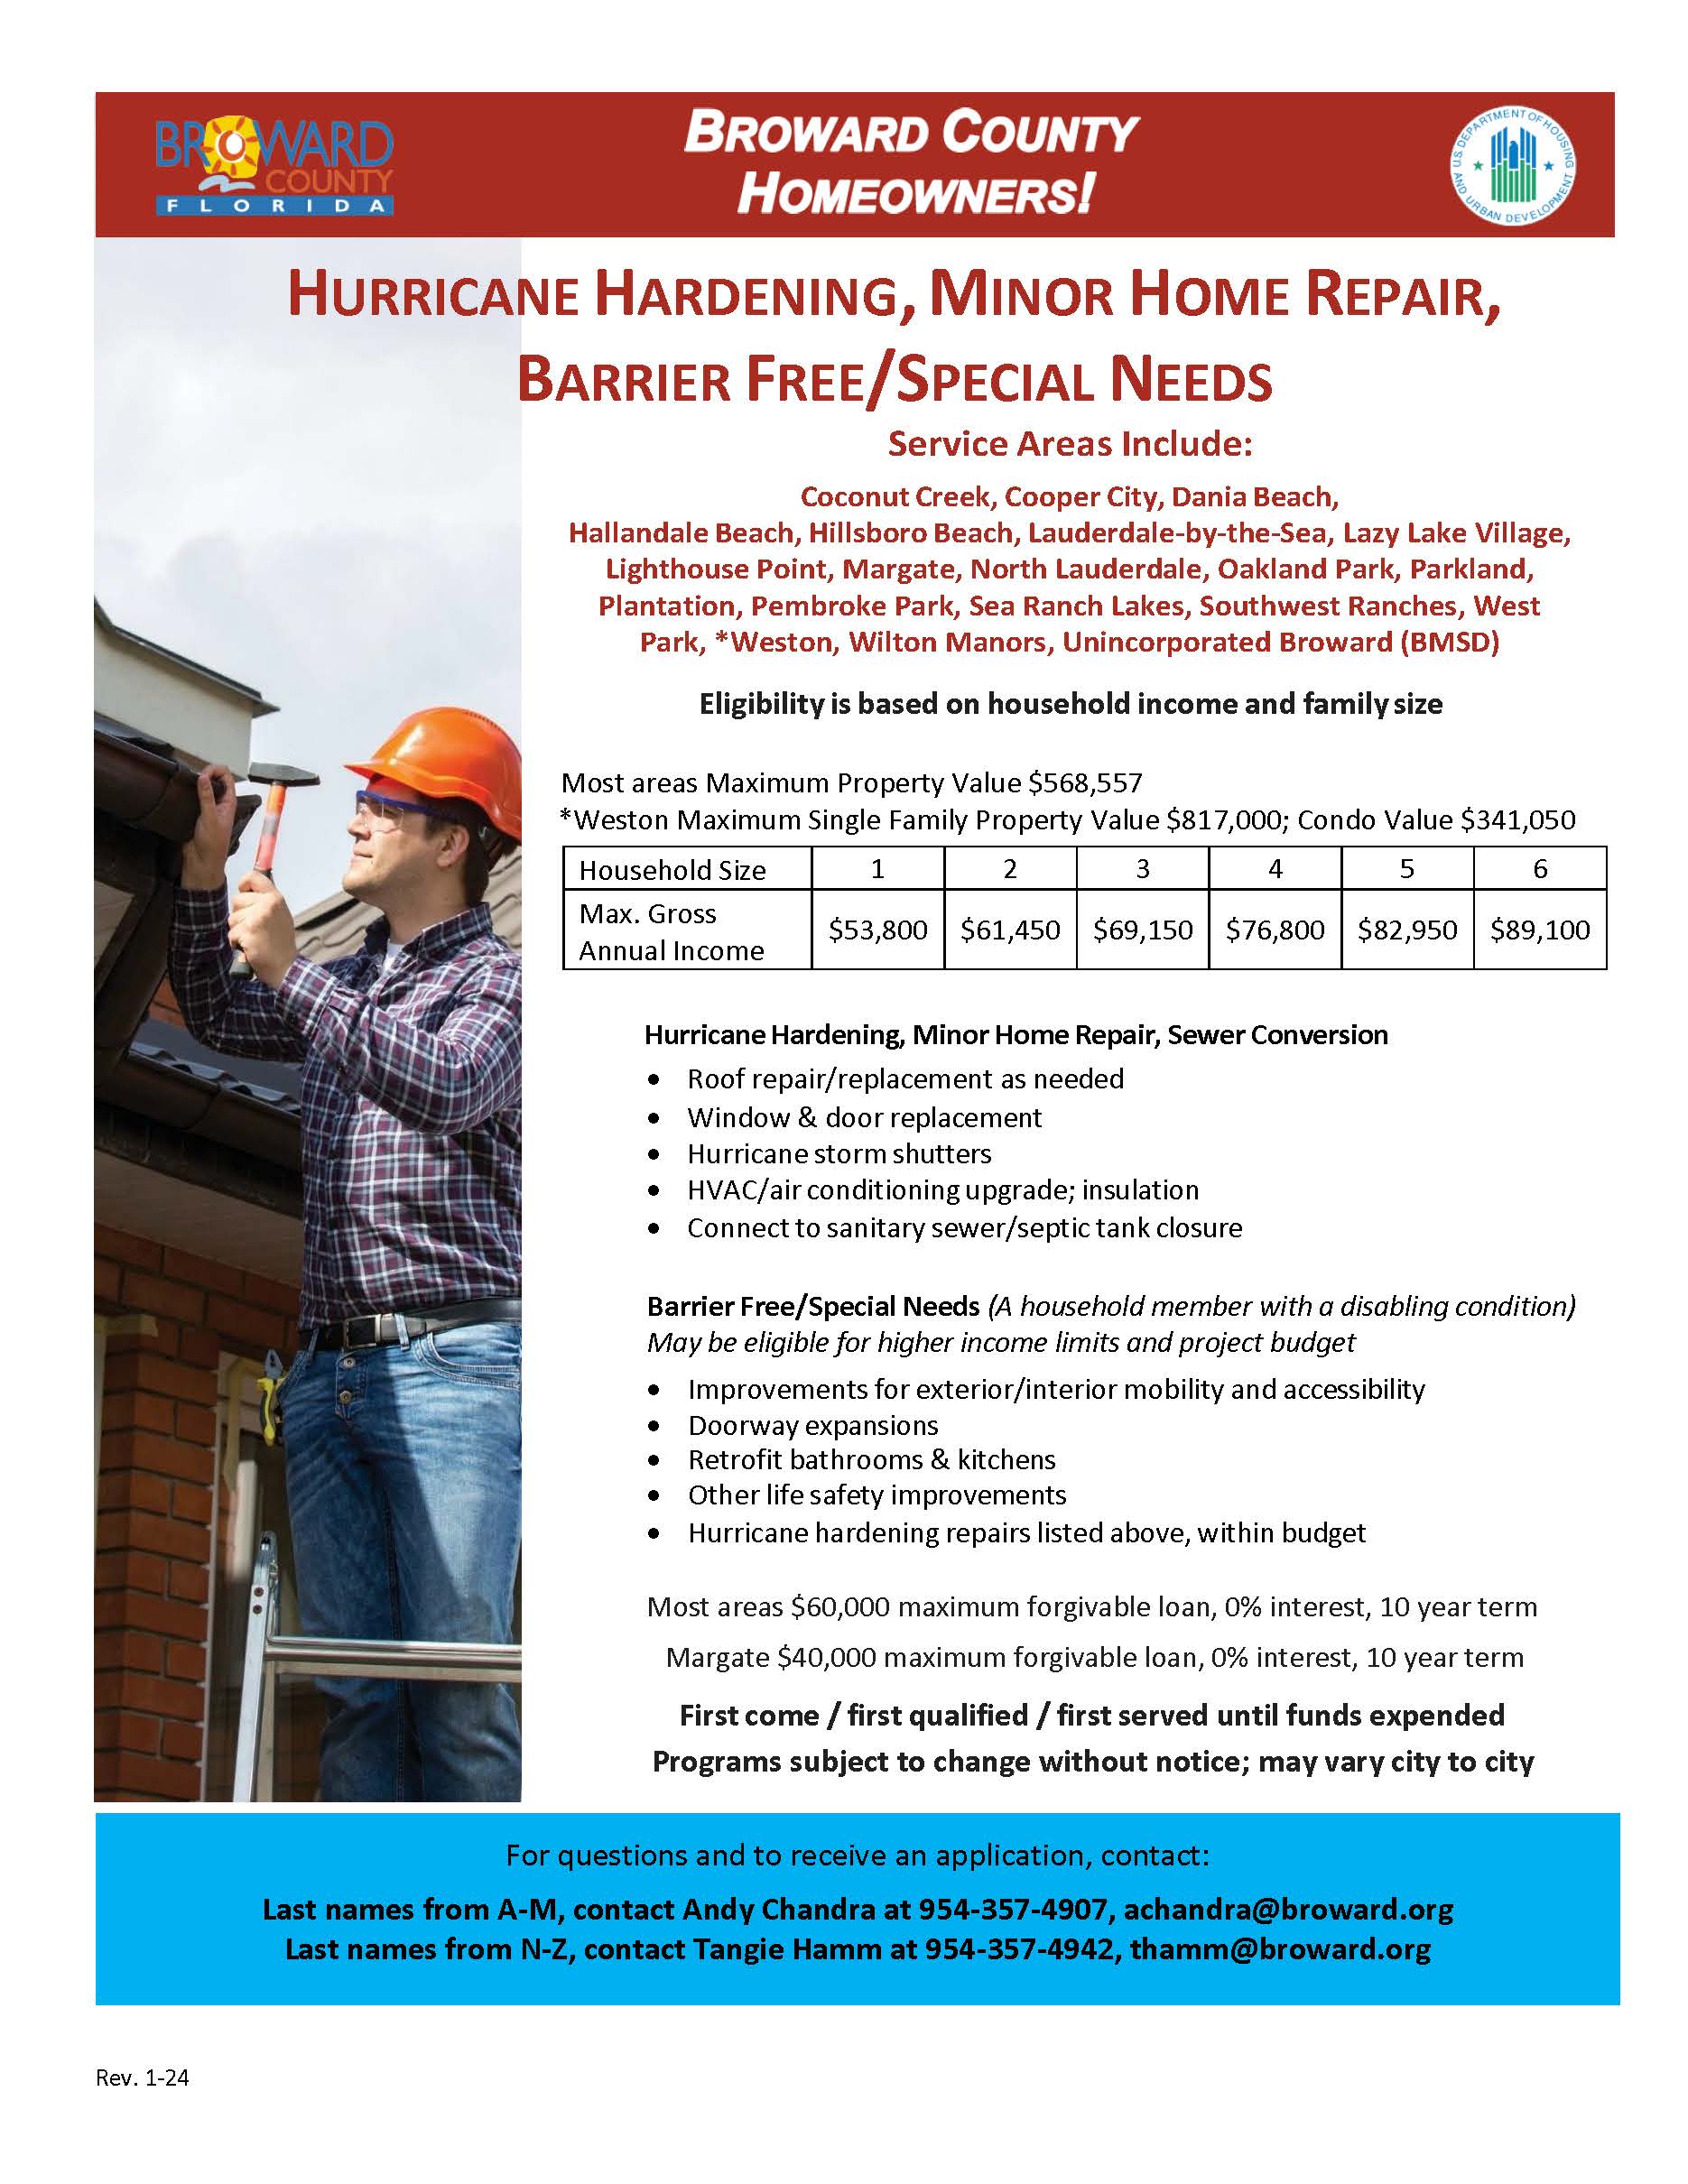 Broward County Hurricane Hardening Program